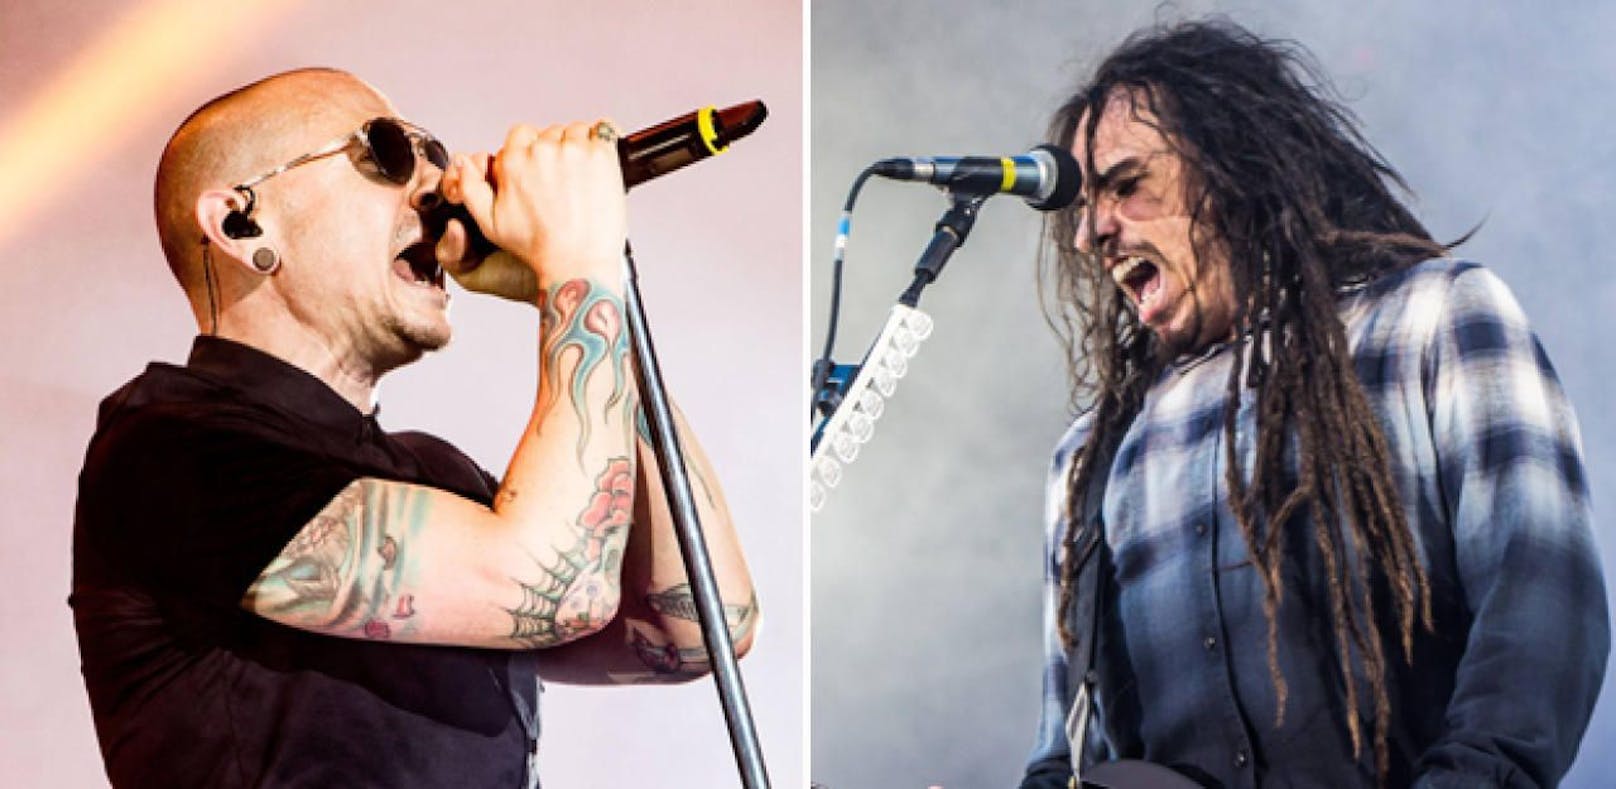 Korn-Gitarrist verärgert über "feigen" Bennington